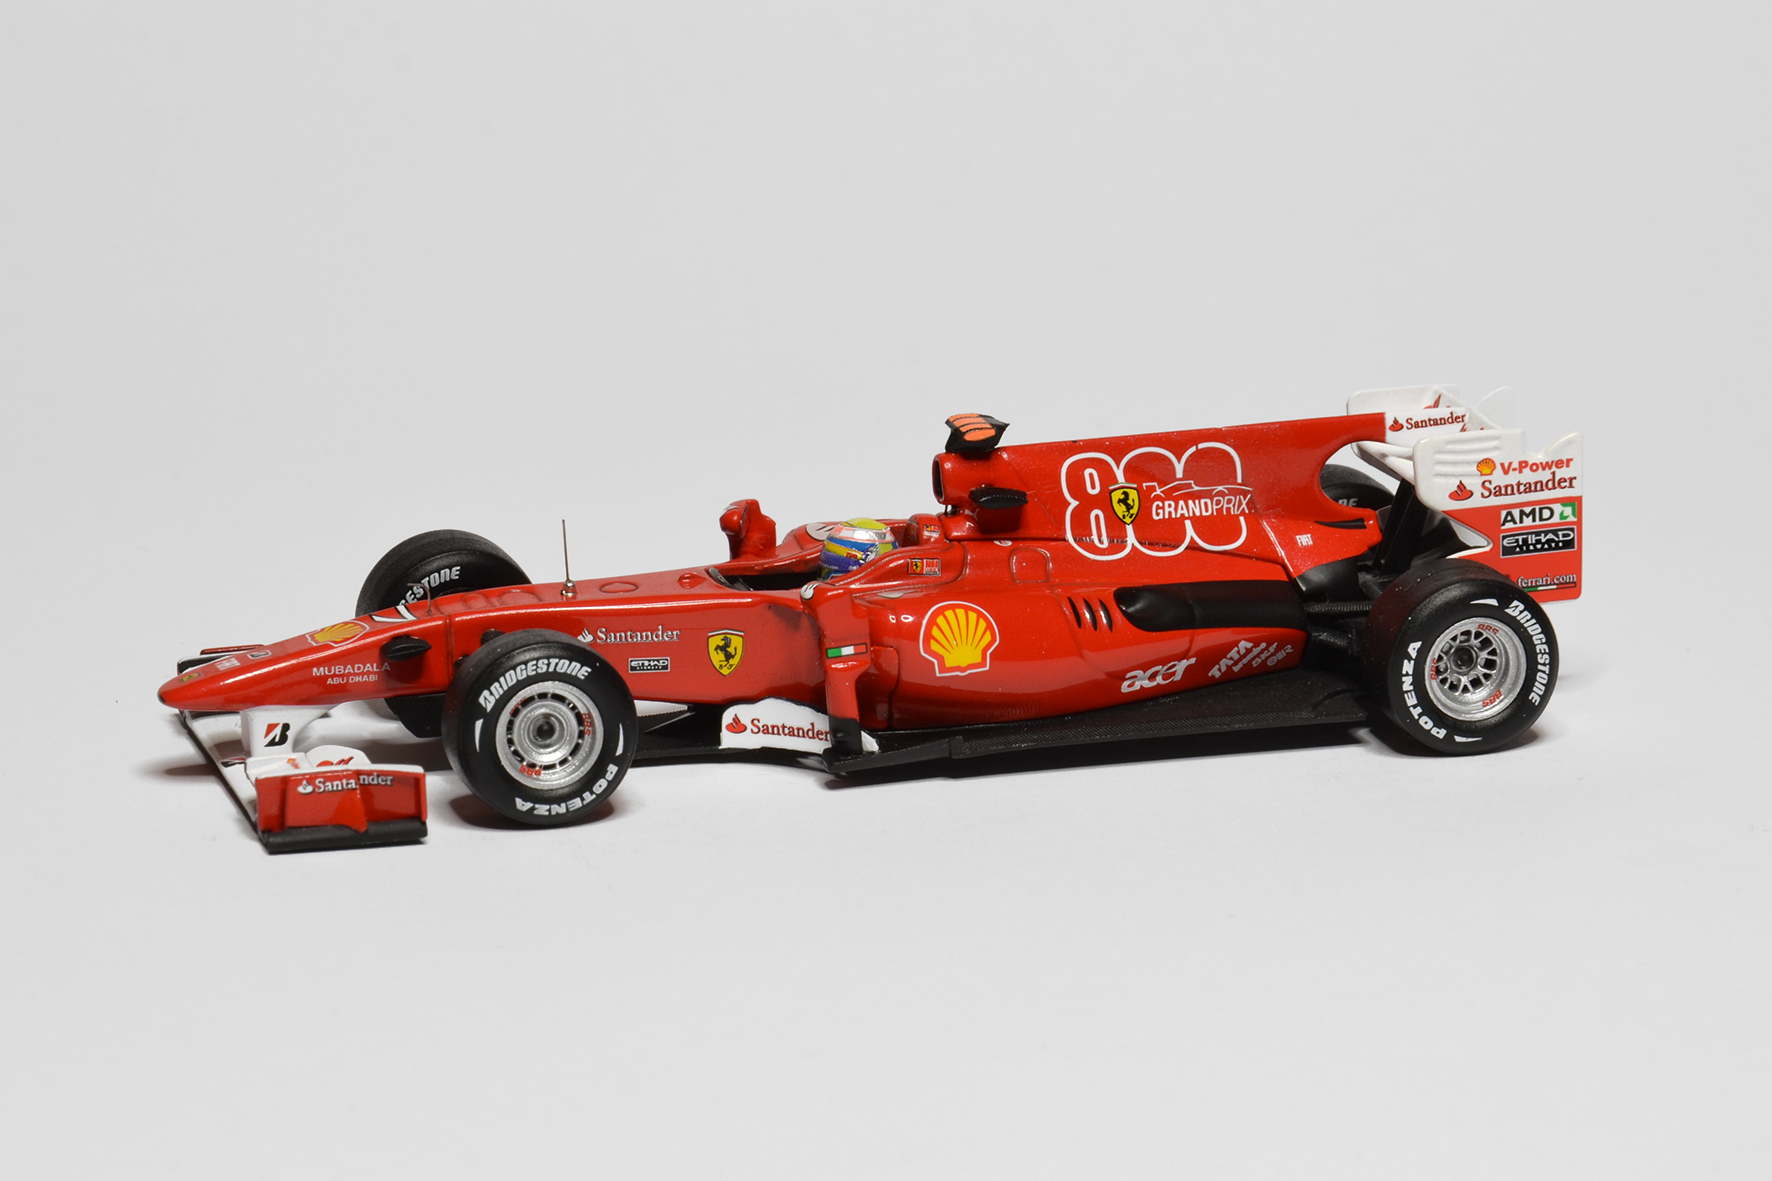 Ferrari F10 | 2010 | Felipe Massa | Hot Wheels - 800th Grand Prix